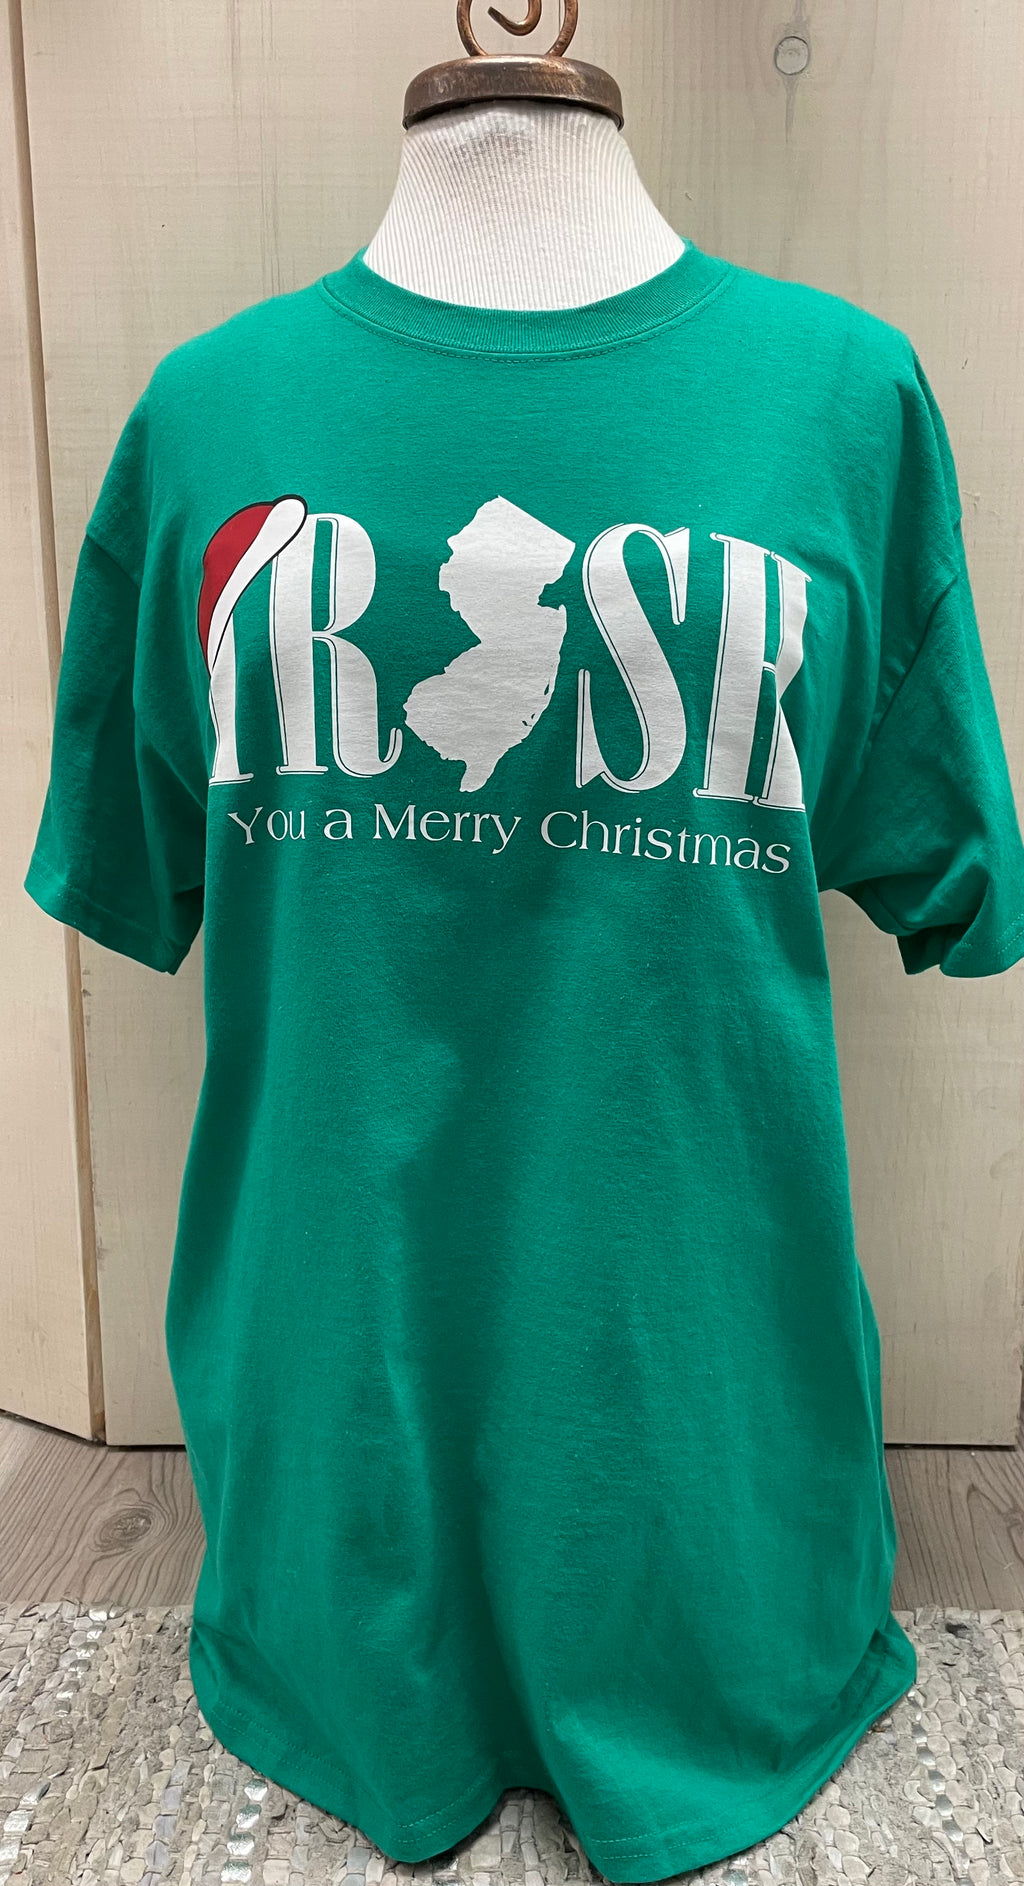 Adult Jersey “Irish You A Merry Christmas” Green